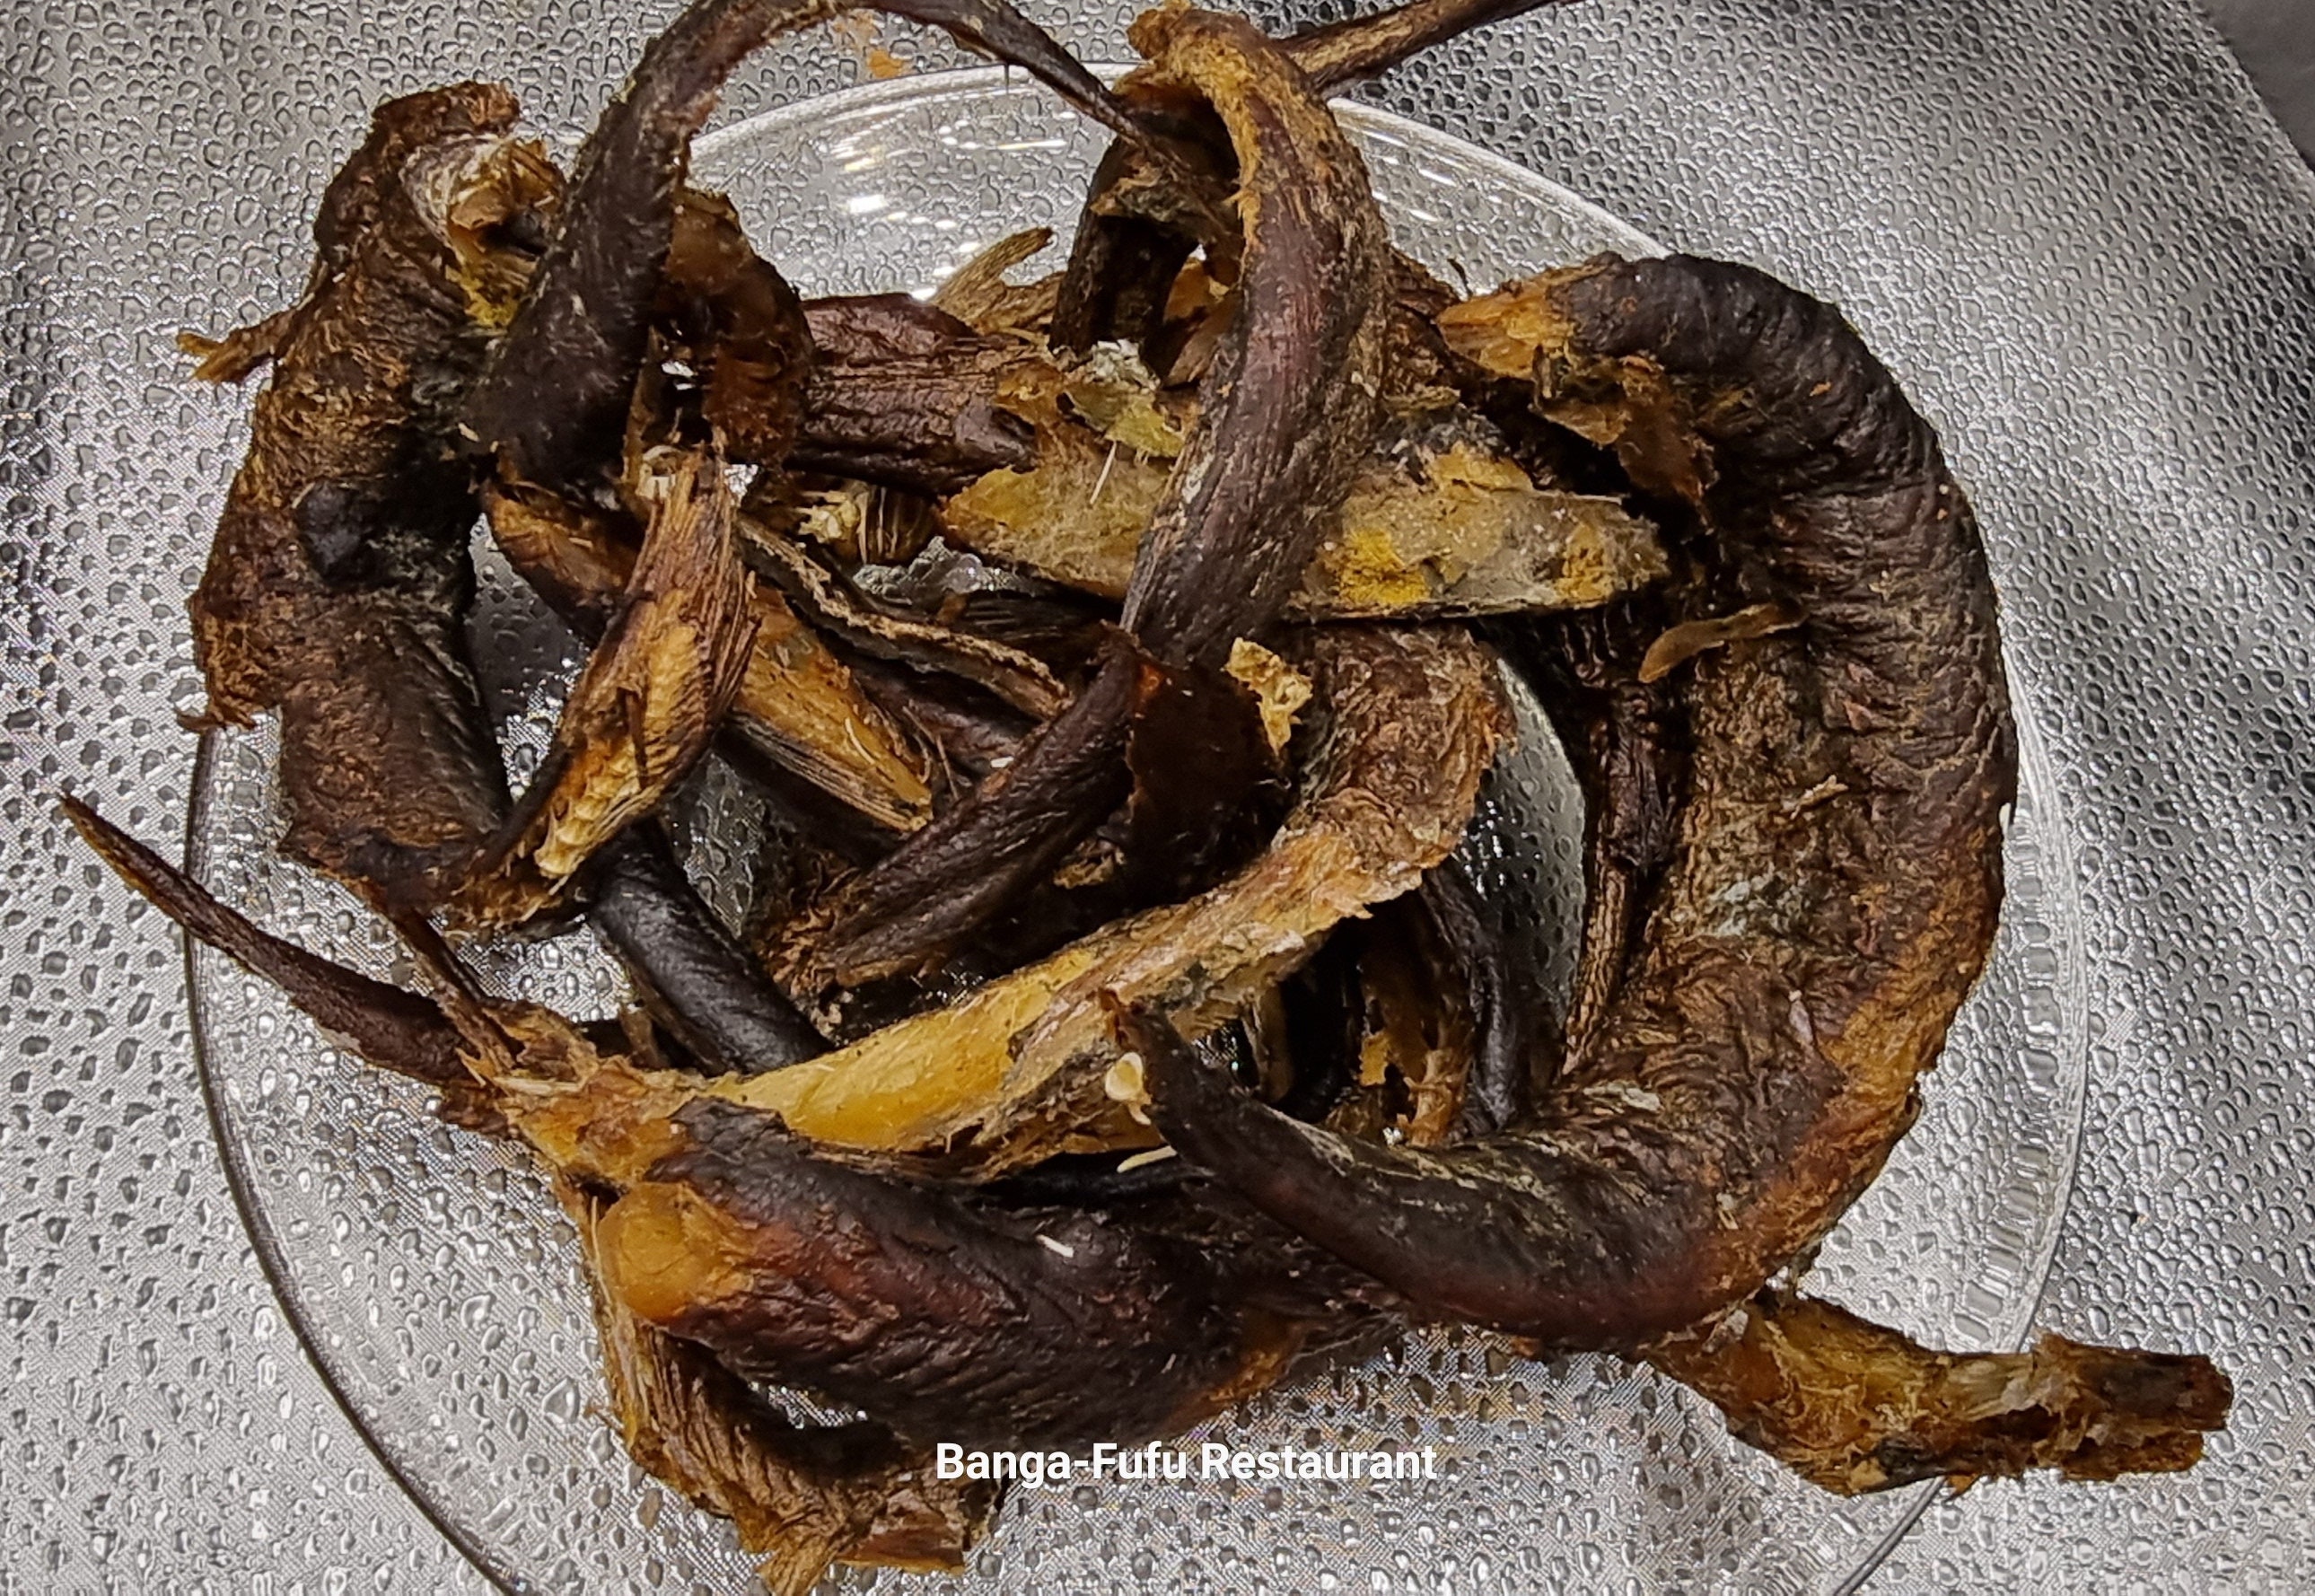 Dried Stockfish - 6.oz Nigeria Stockfish/Opkoroko/Africa/Oven Baked/Dried  fish/Organic/All Natural